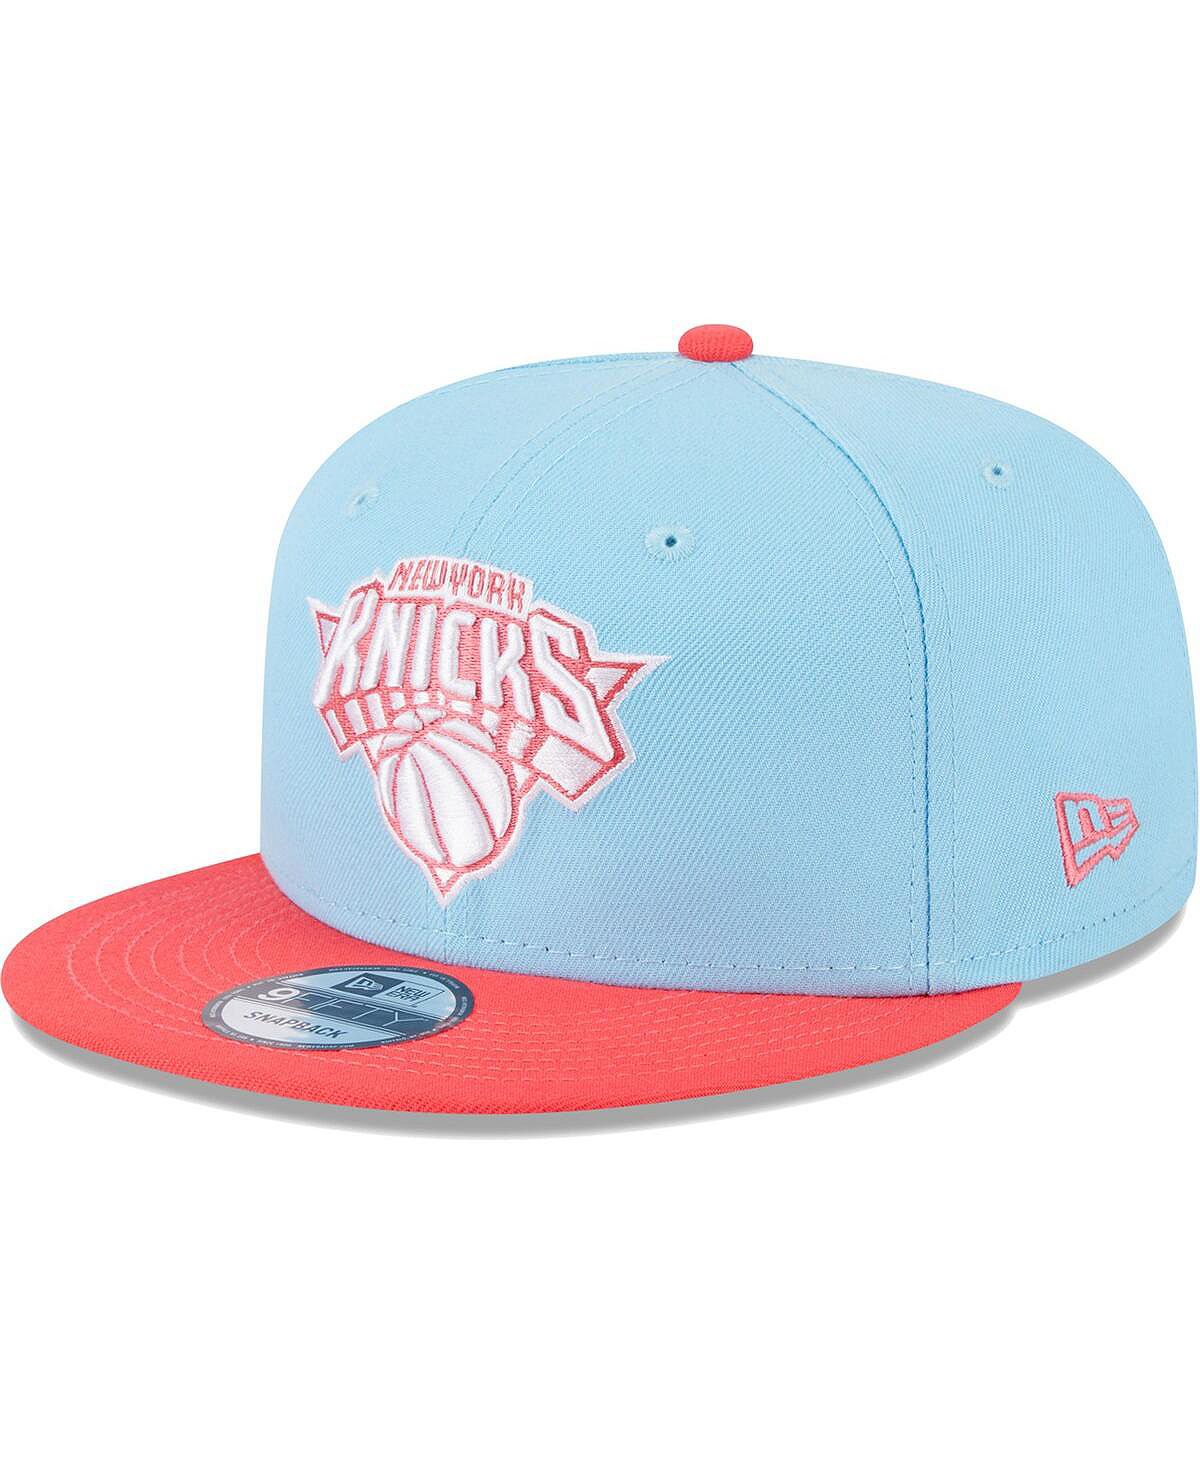 Мужская кепка Snapback 9FIFTY с темно-синим и красным цветами New York Knicks 2-Tone Color Pack New Era